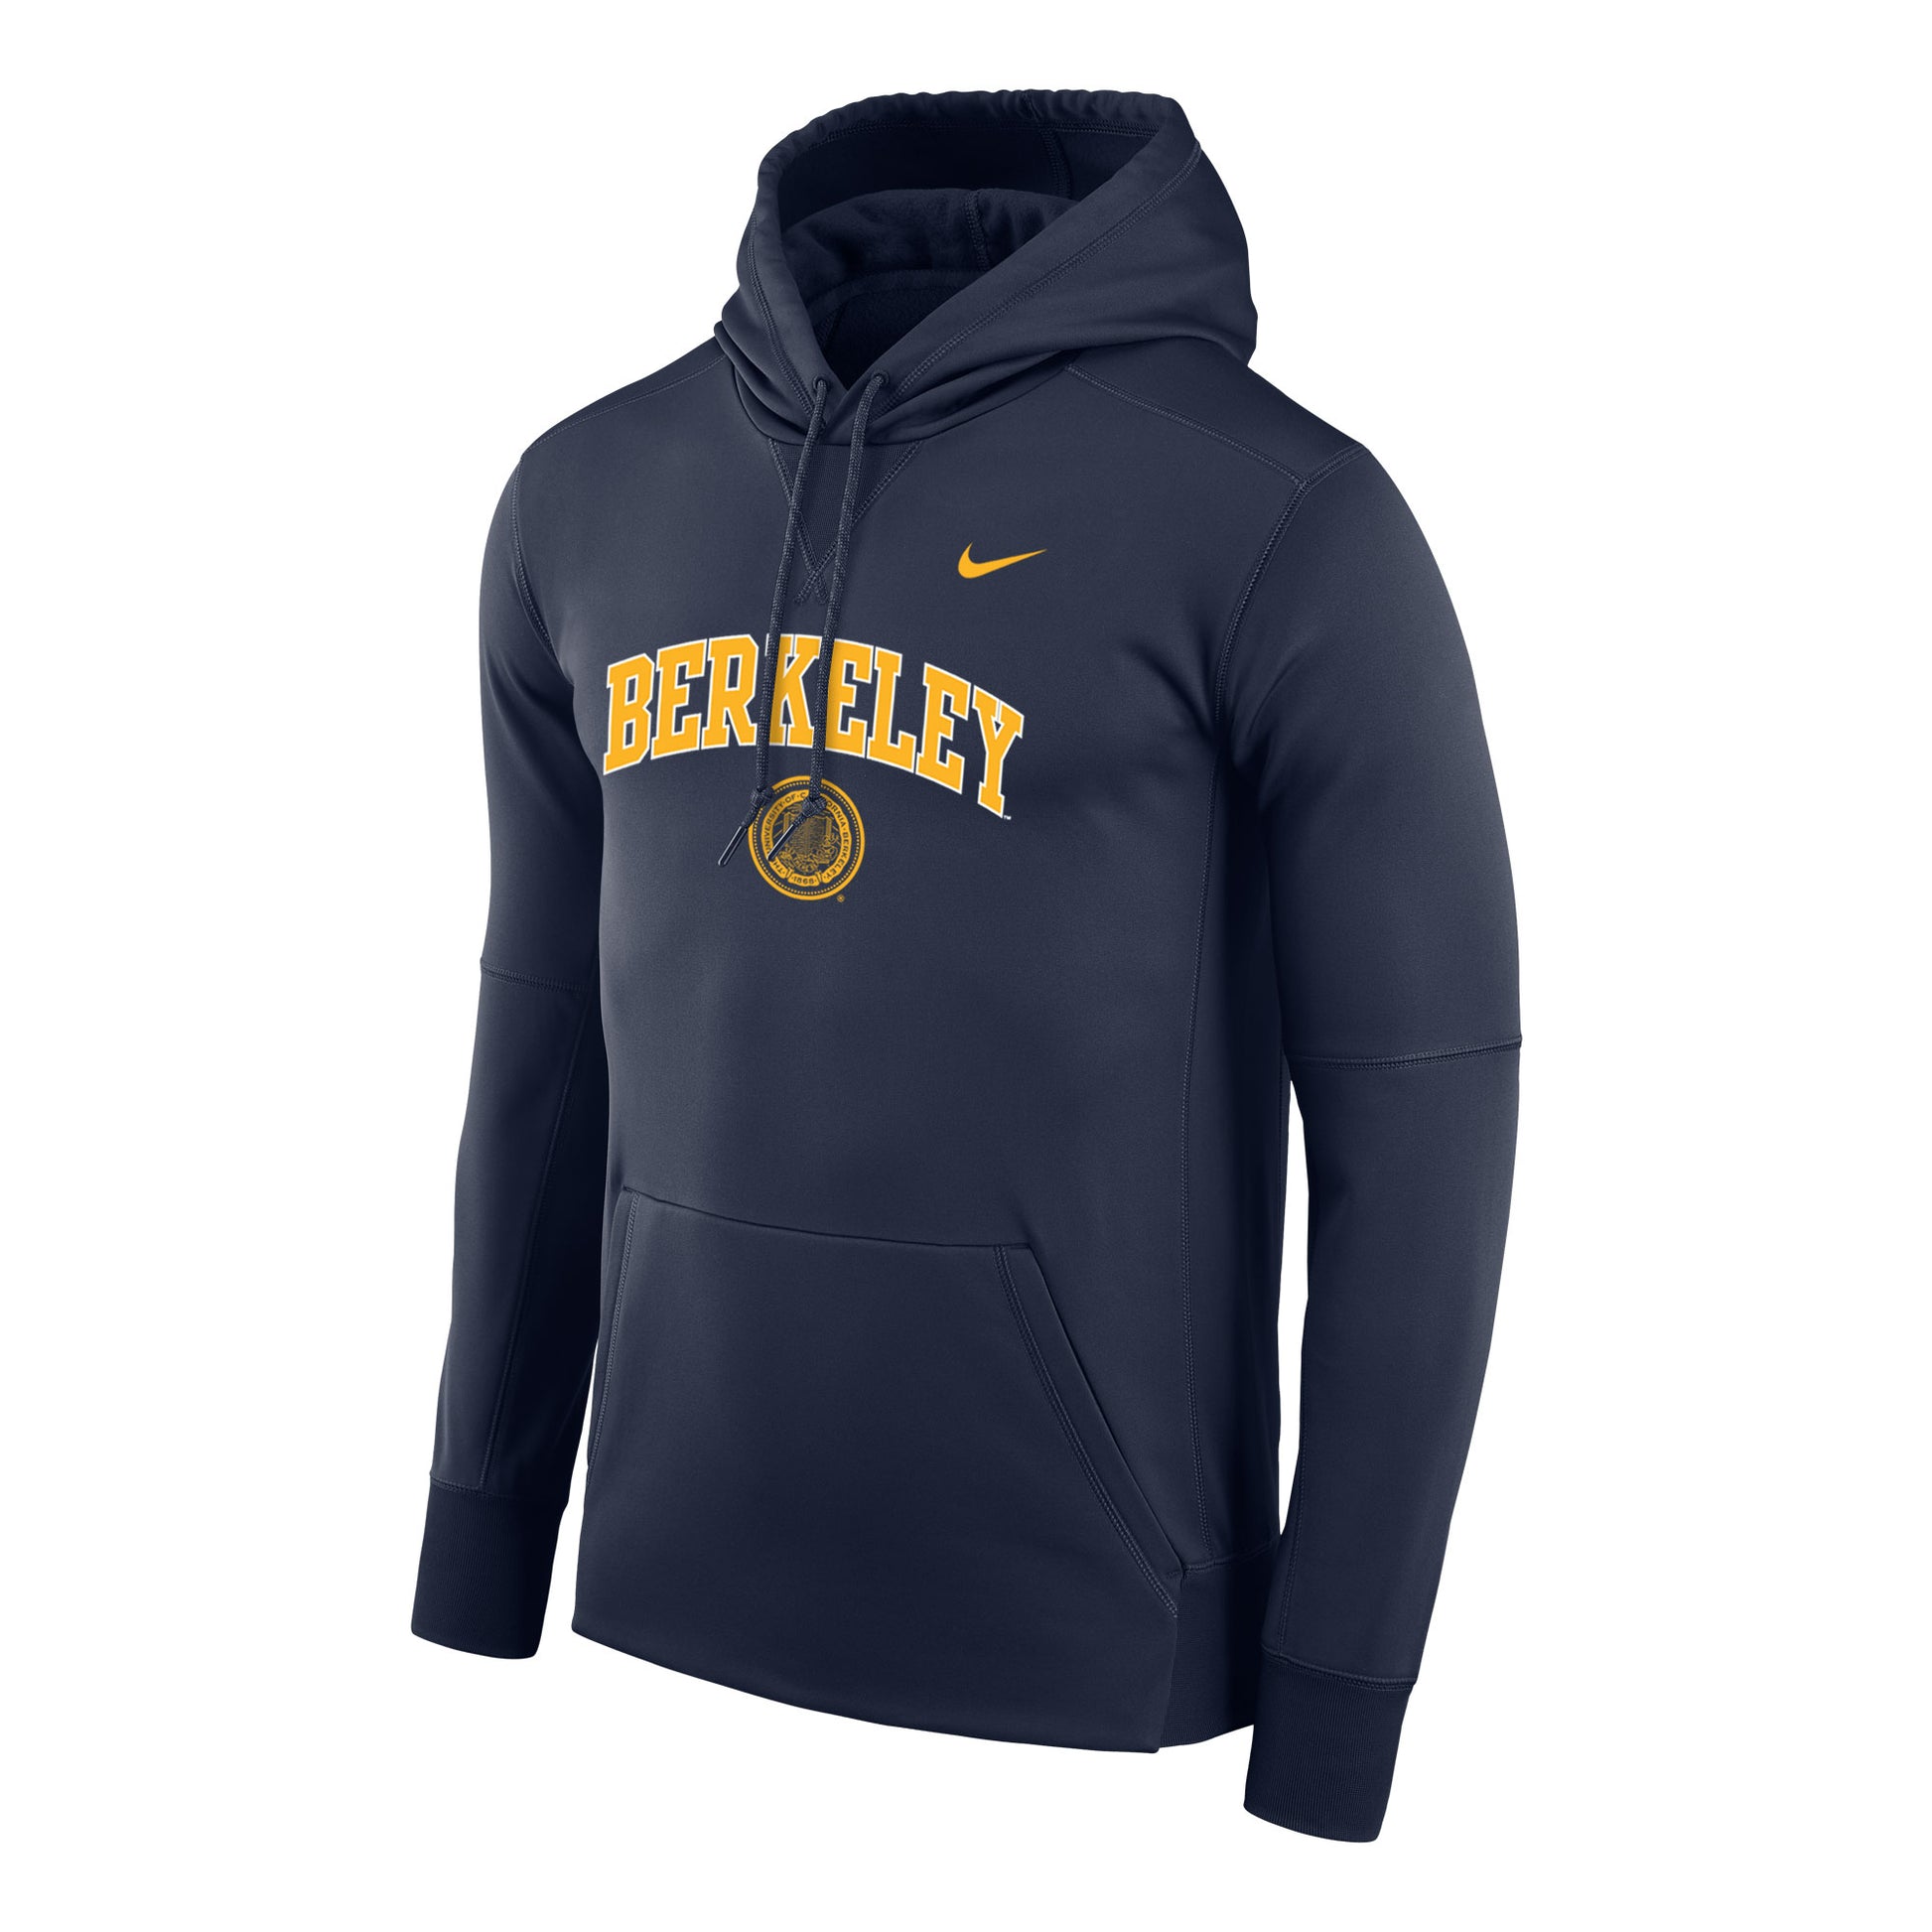 U.C. Berkeley Cal arch & seal Nike Therma fleece hoodie sweatshirt-Navy-Shop College Wear